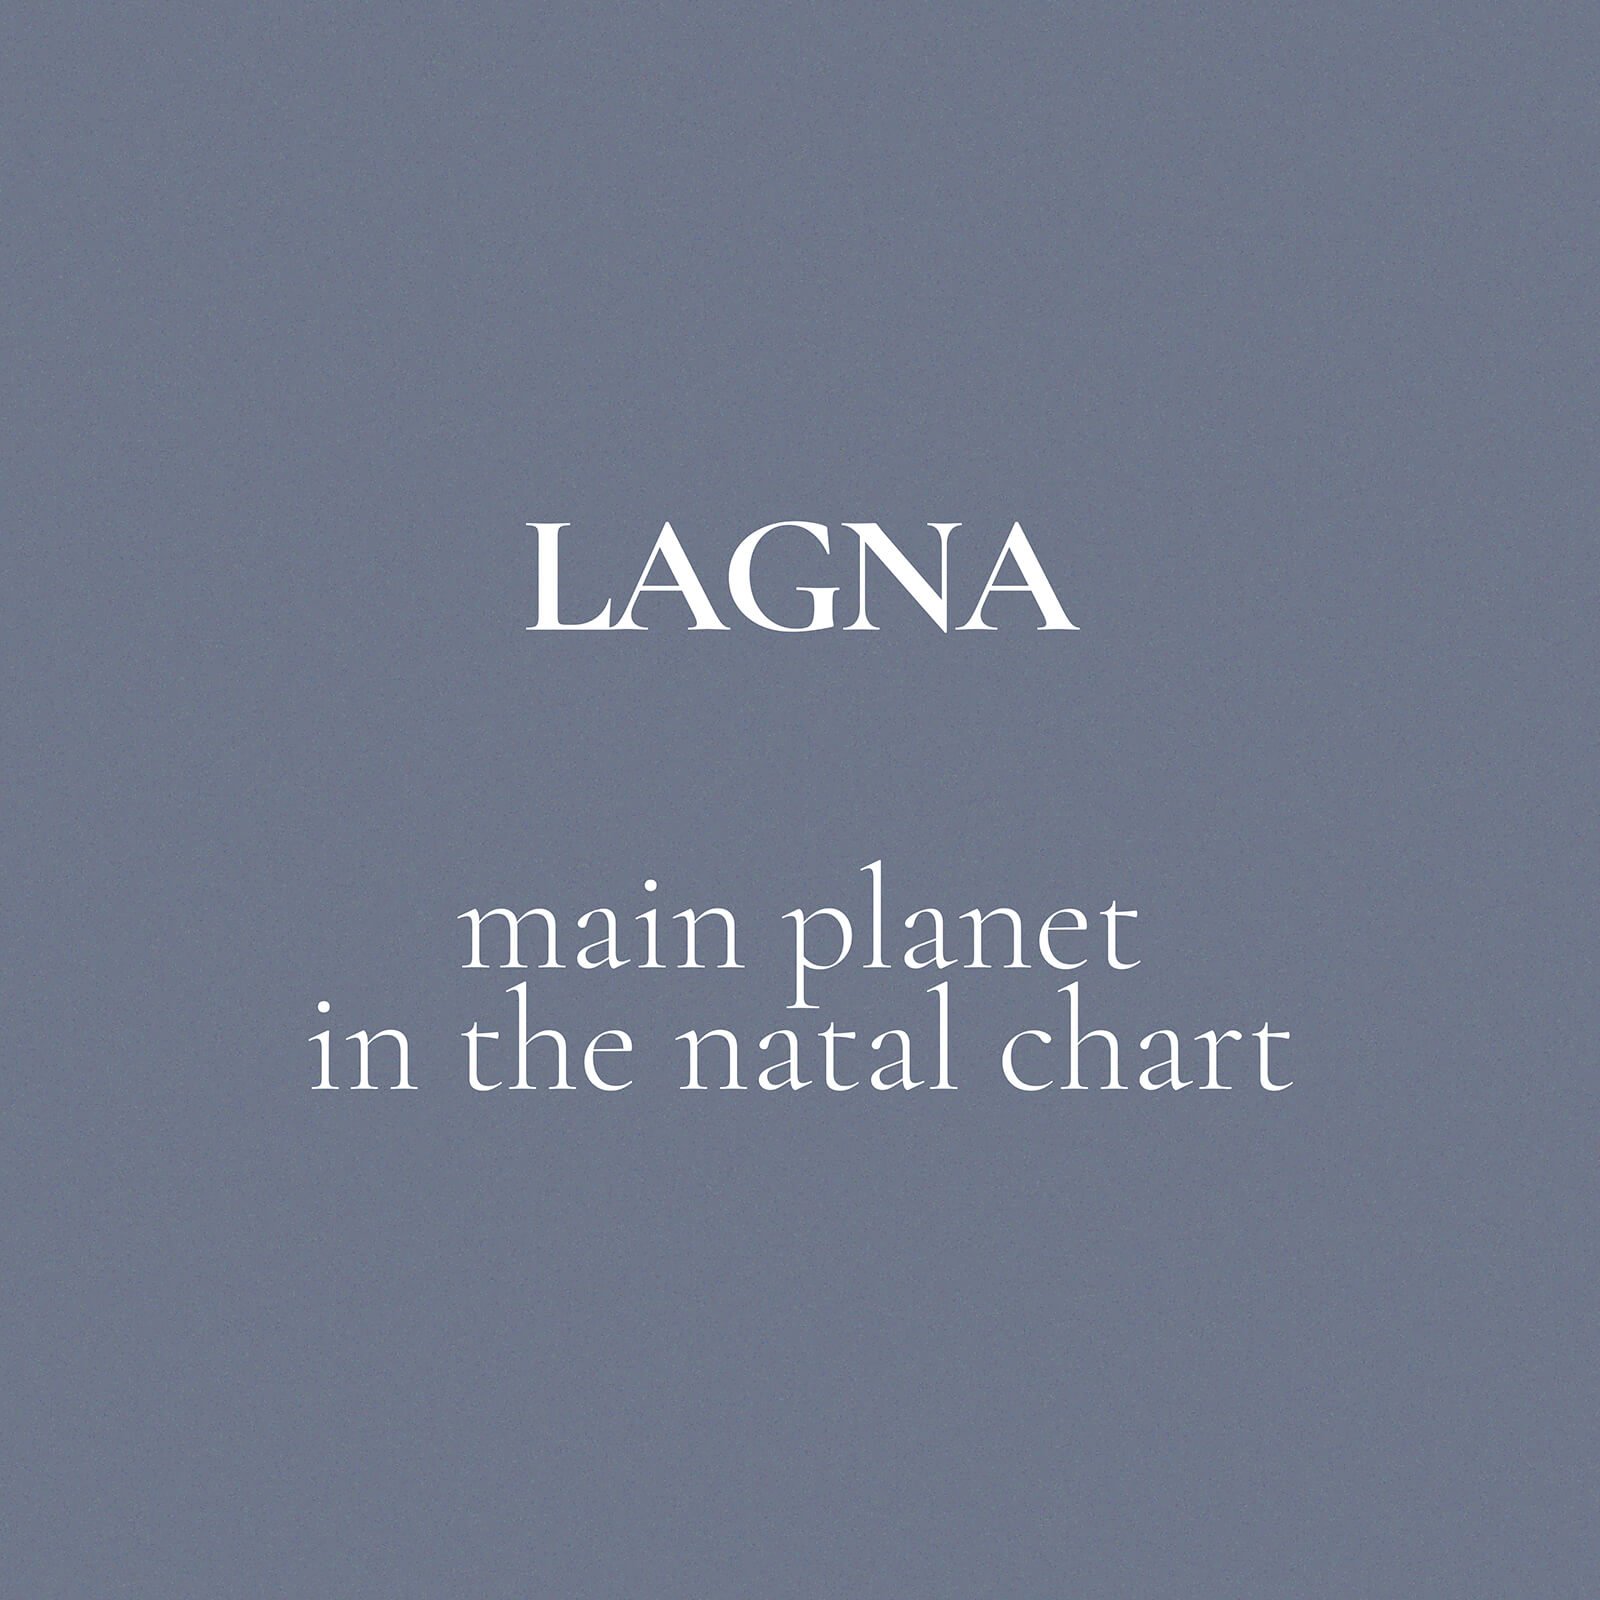 Lagna - an ascending sign or an ascendant